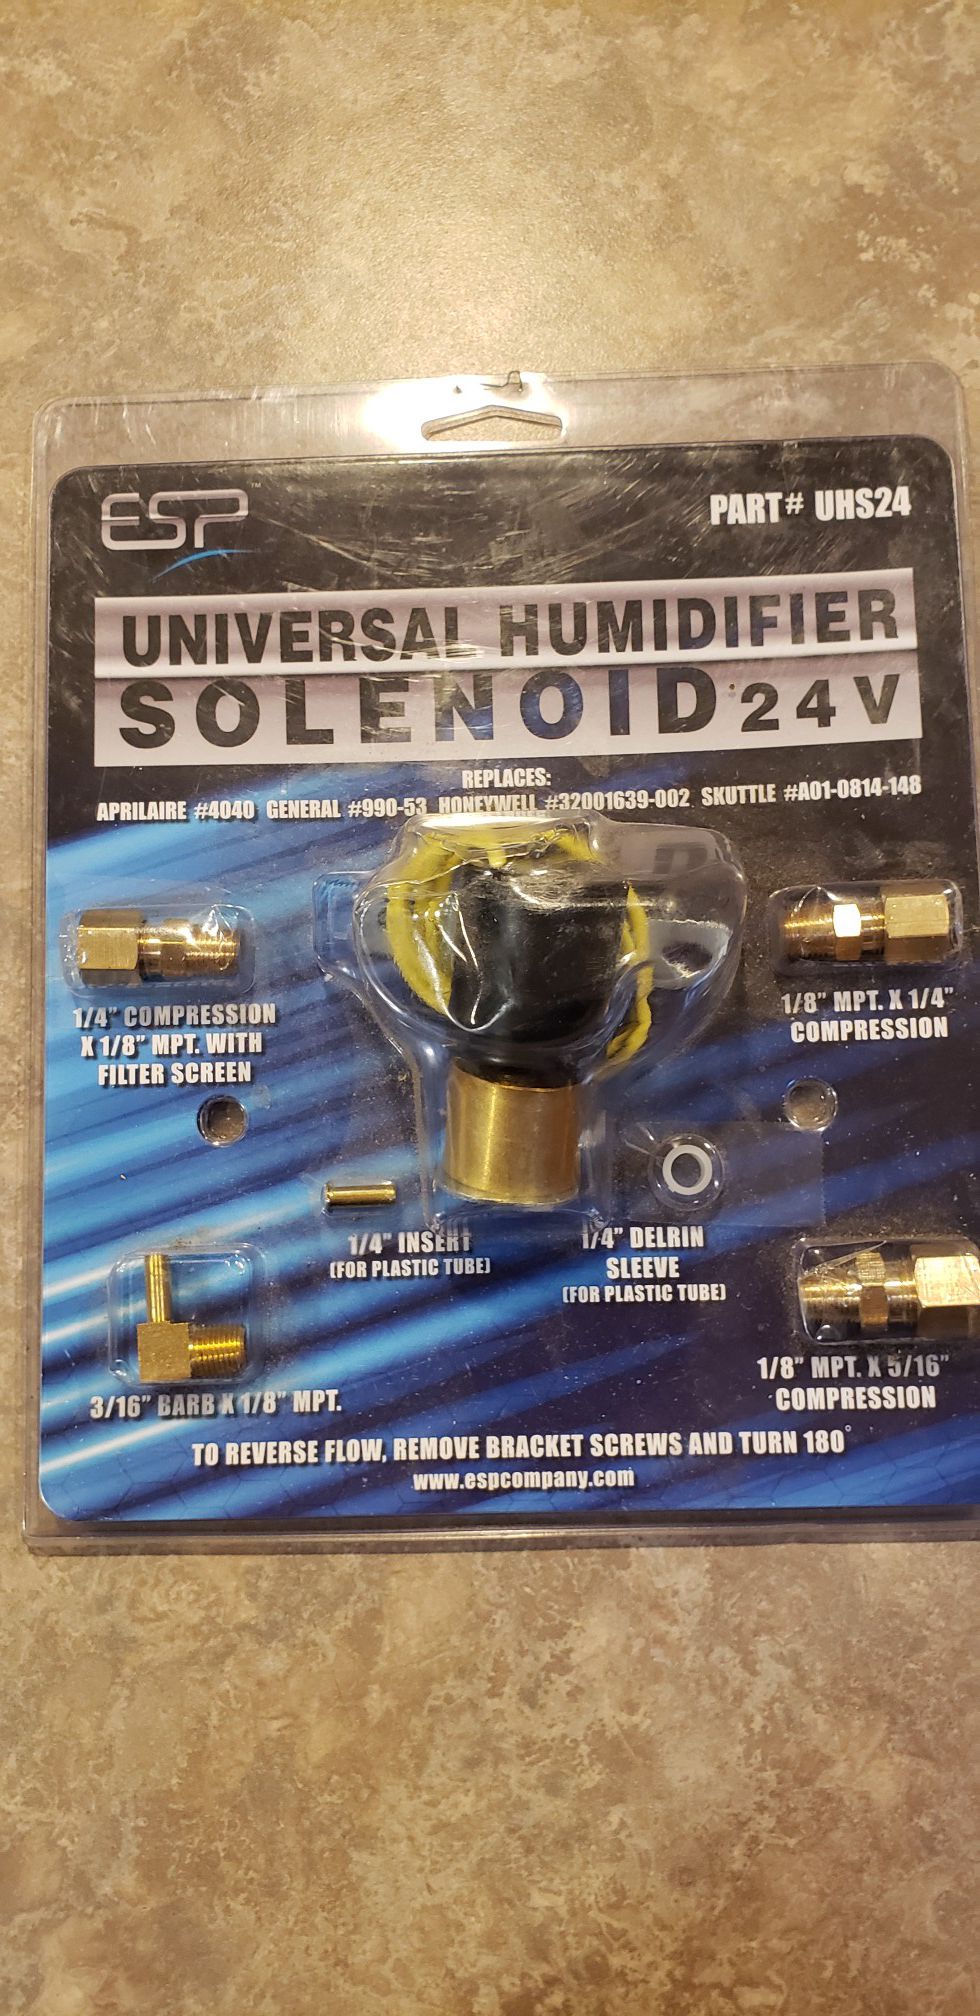 Universal humidifier solenoid 24v